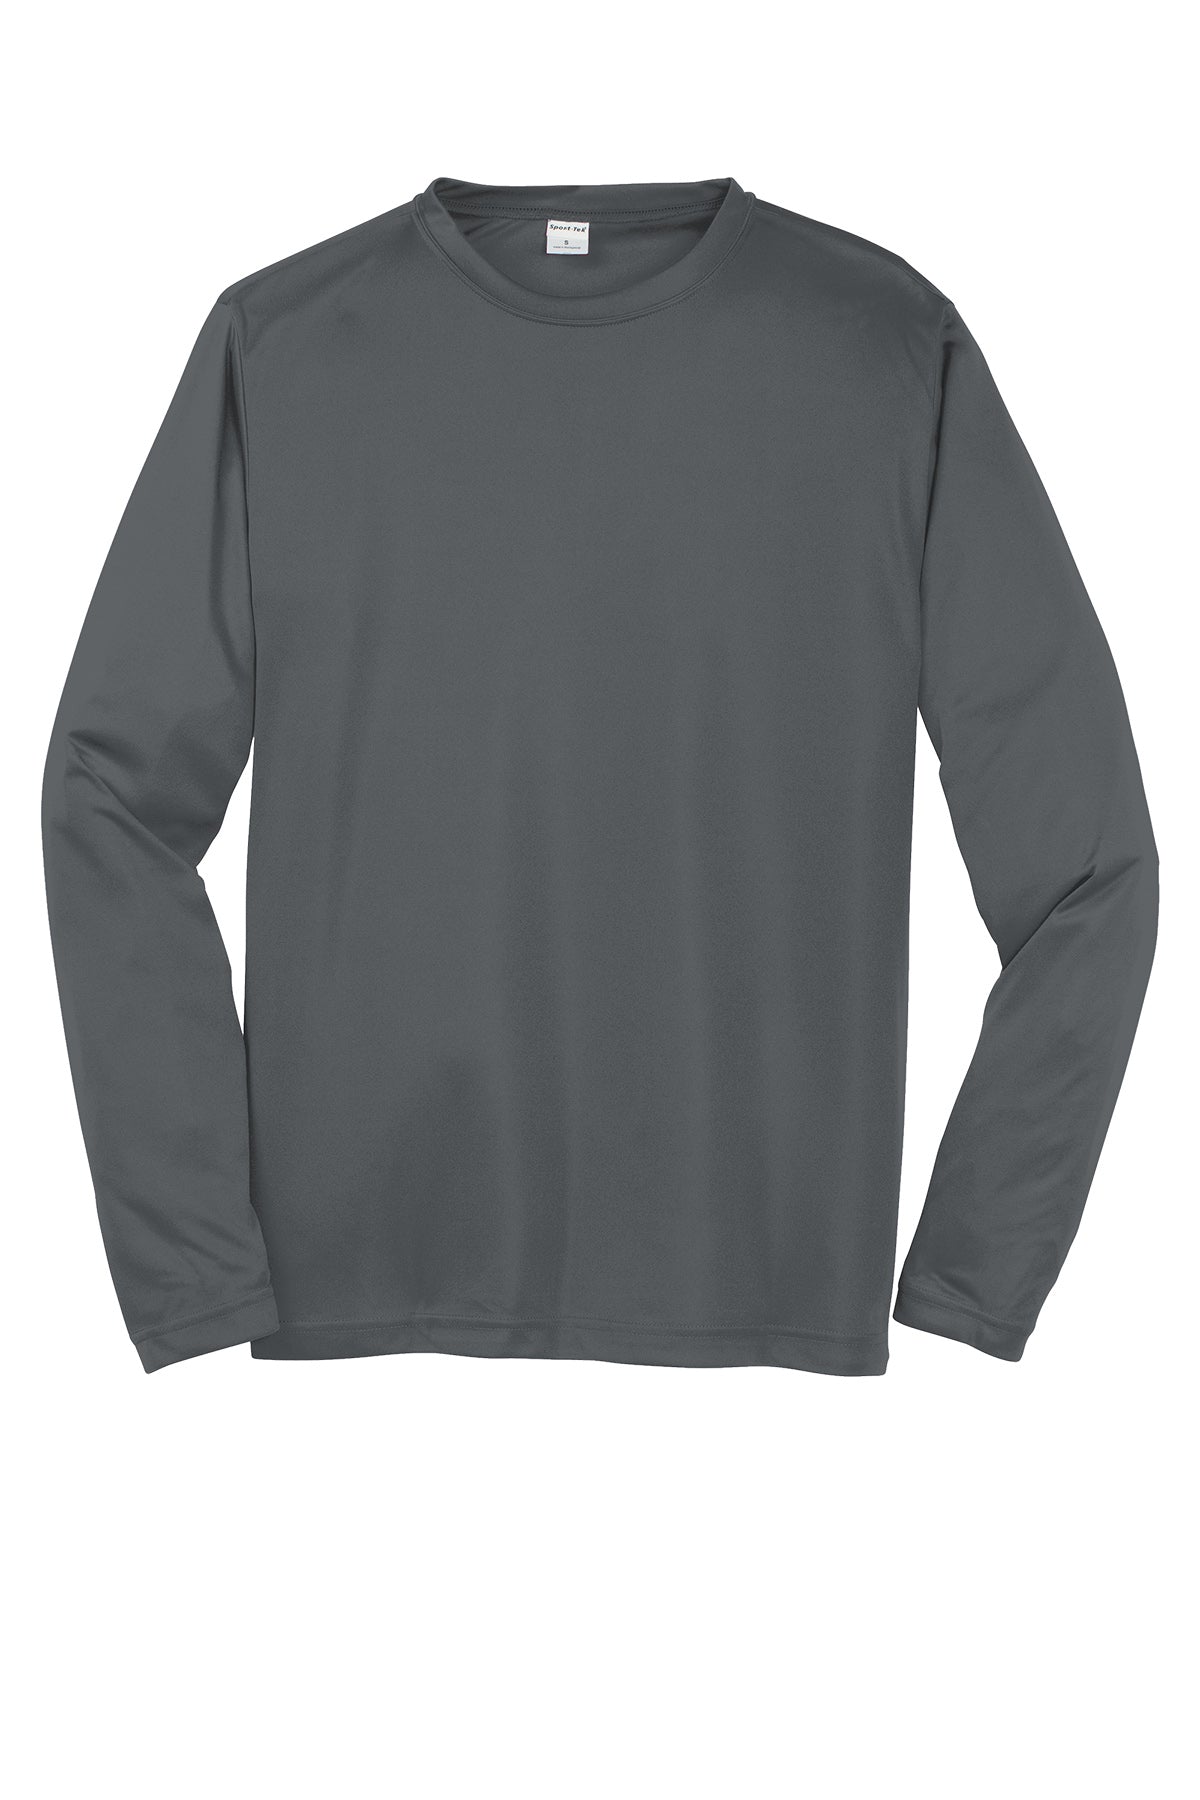 Sport-Tek St350Ls Polyester Adult Long Sleeve T-Shirt Ad Small / Iron Gray